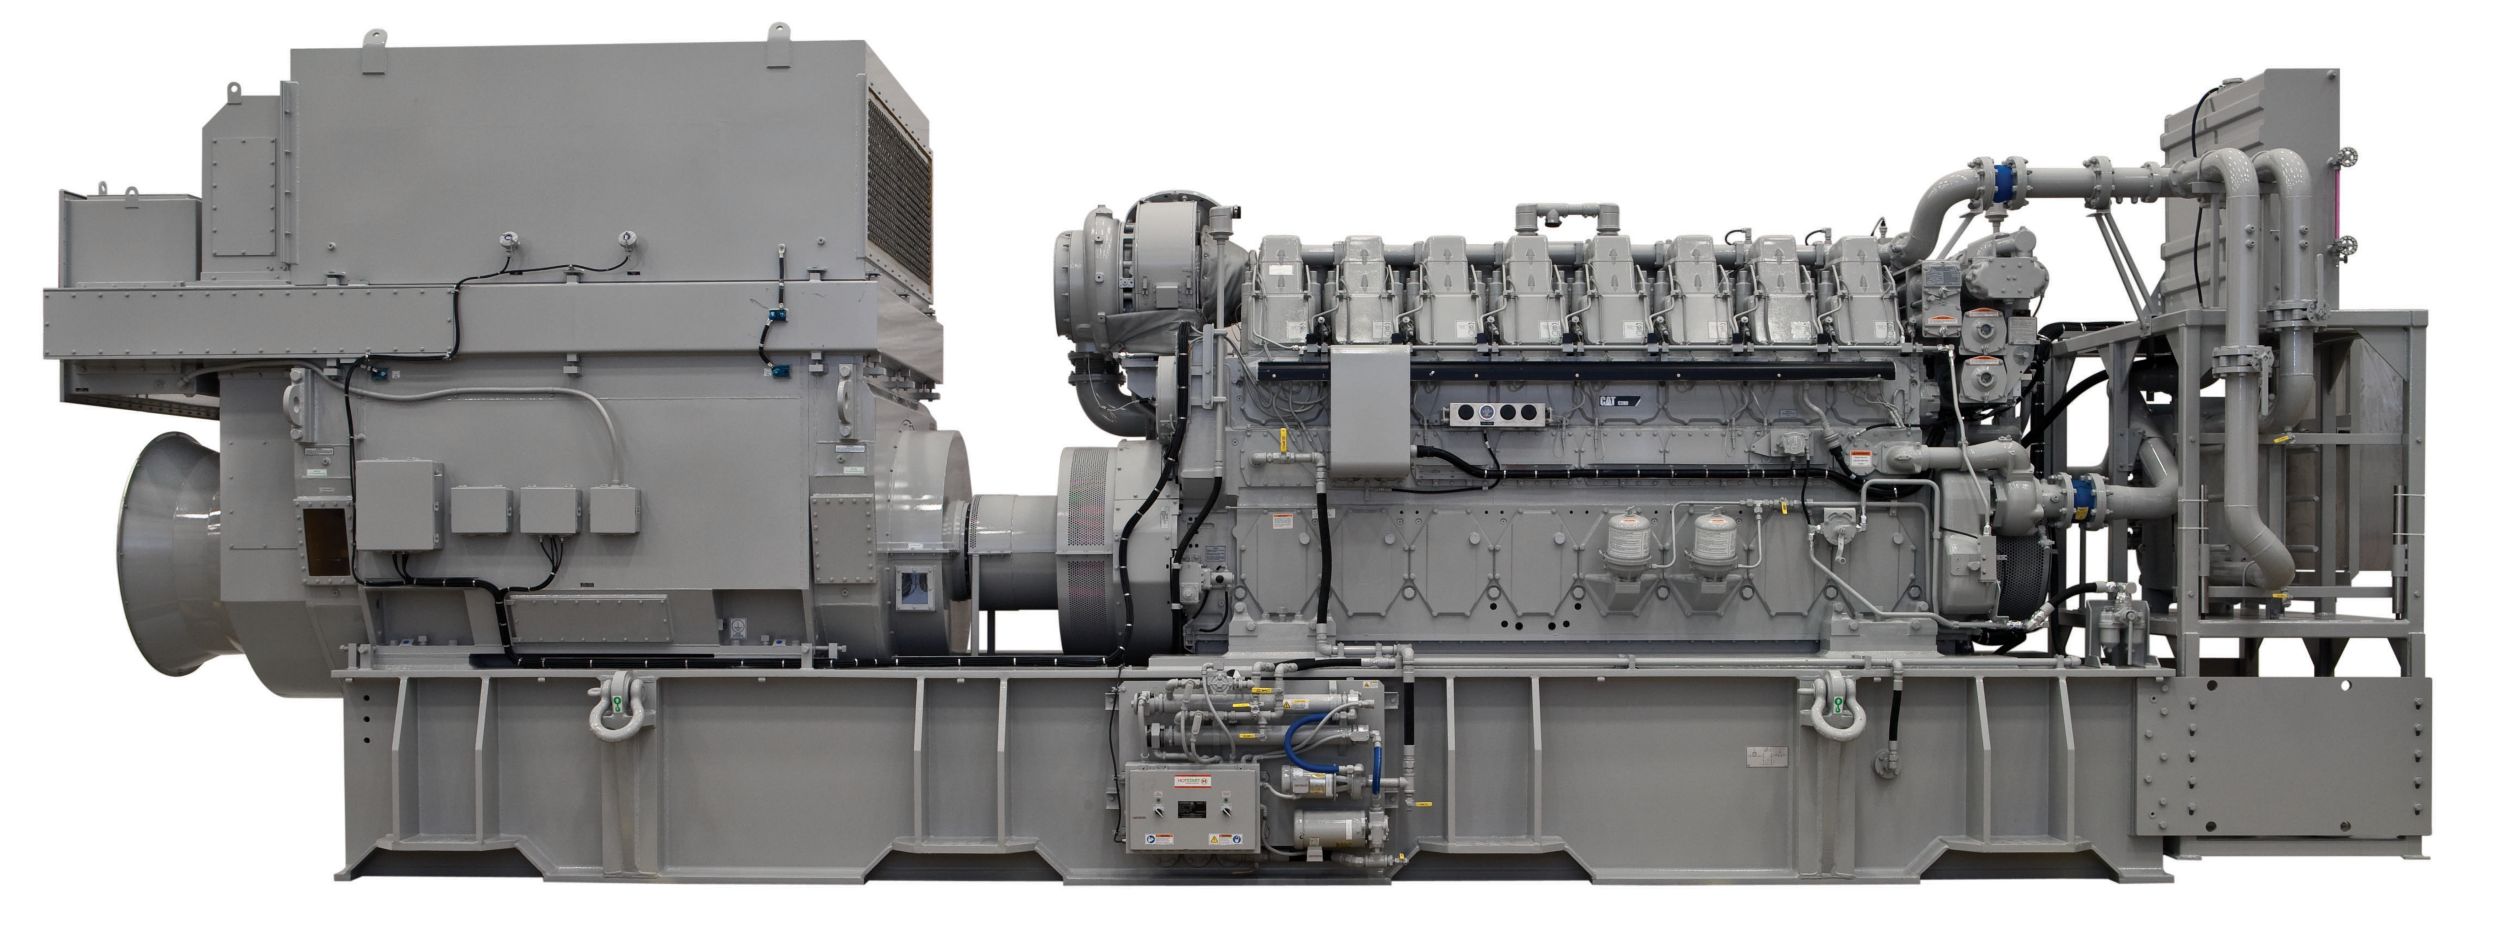 Morski agregat prądotwórczy C280-8